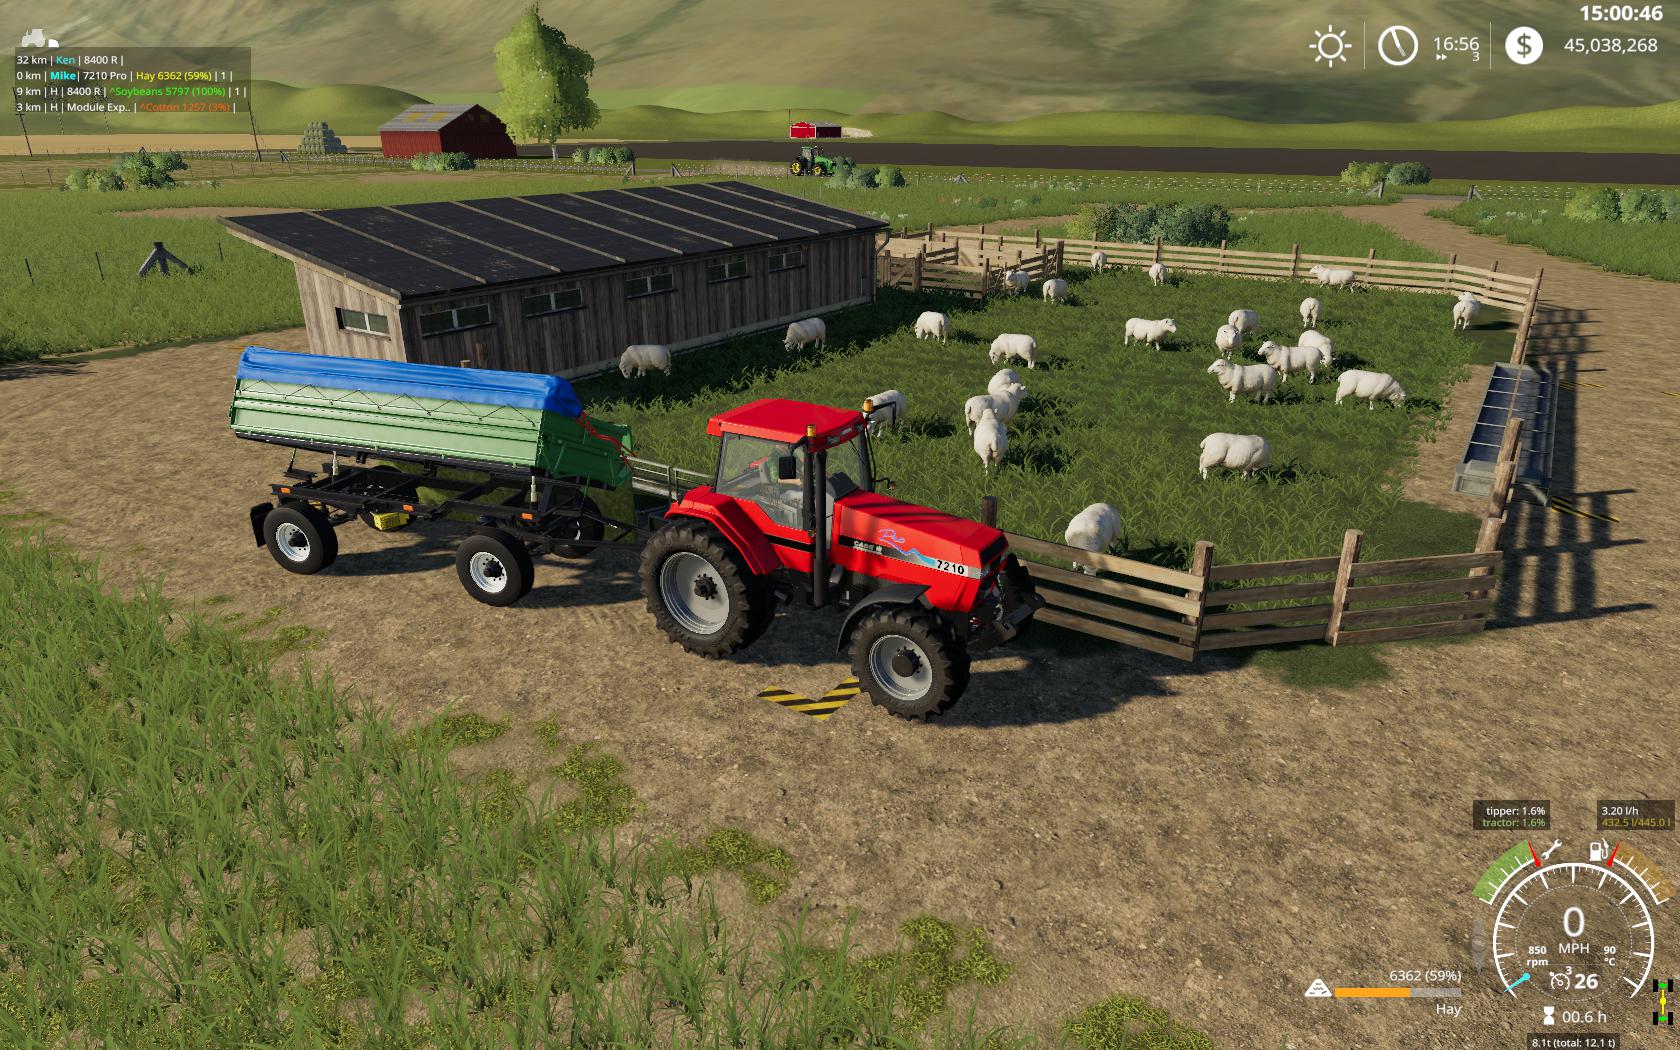 Jones Dairy Farm V12 Fs19 Farming Simulator 19 Mod Fs19 Mod 5650